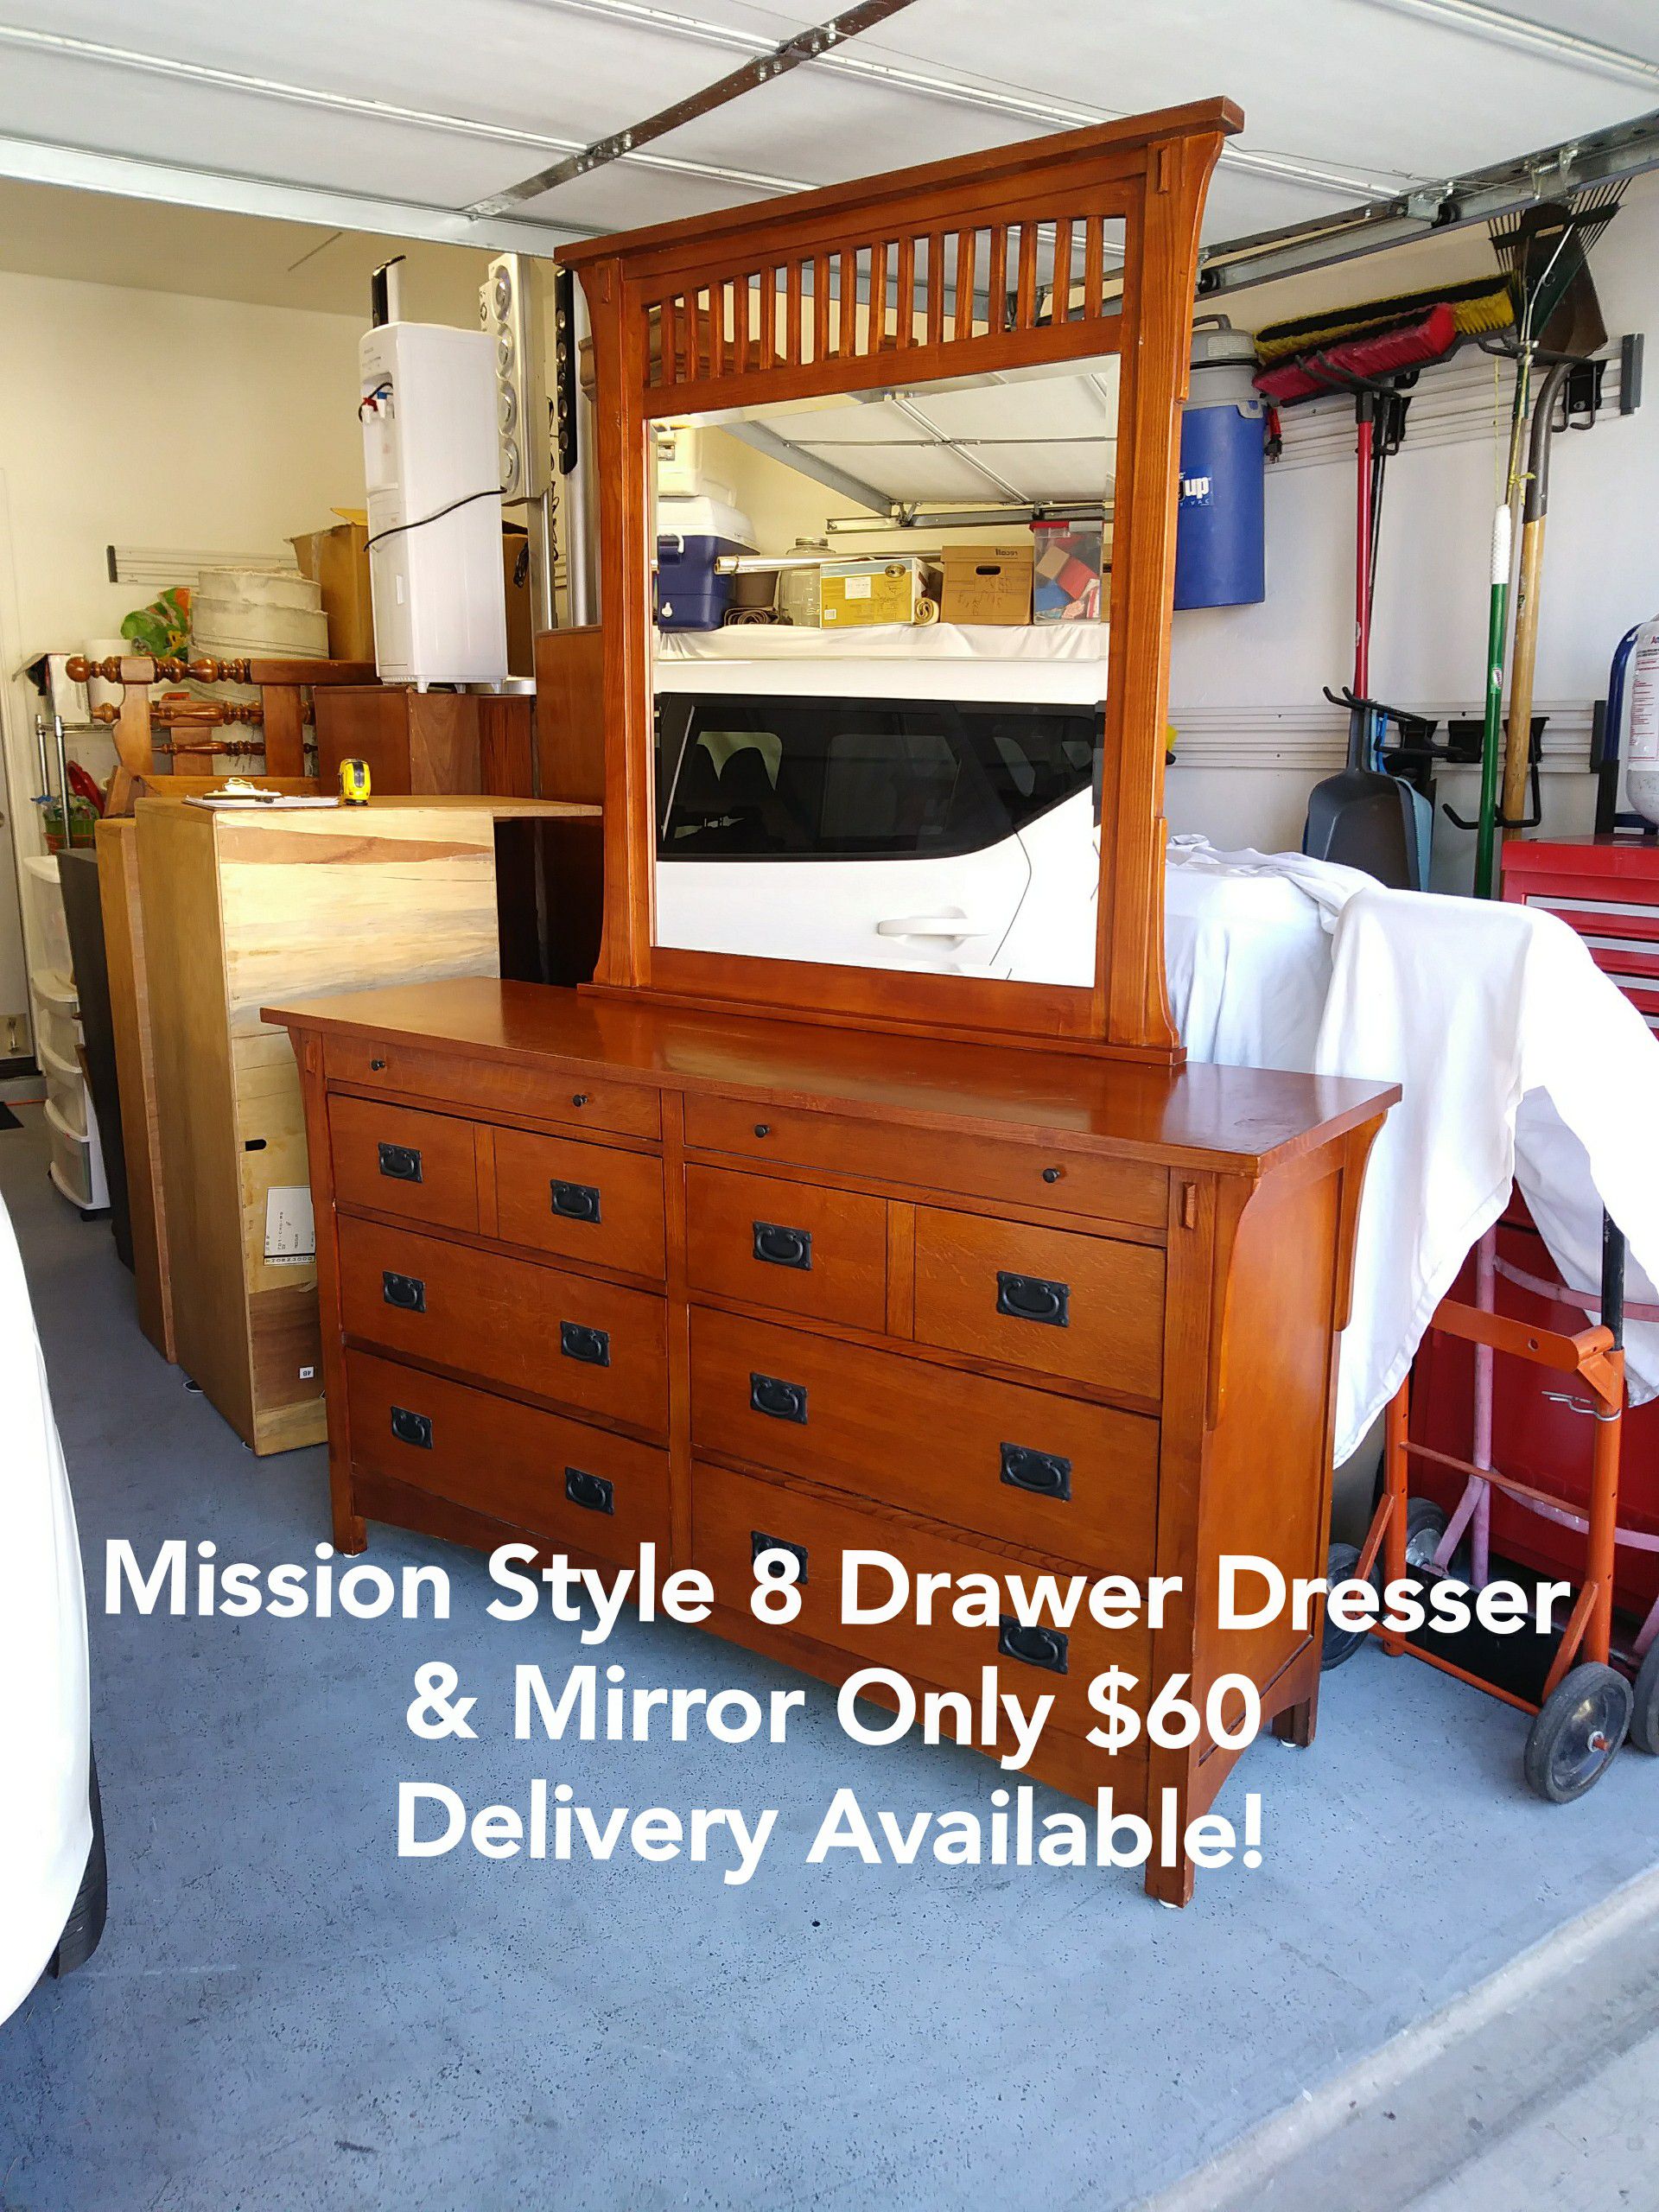 Mission Style 8 Drawer Dresser w/ Beveled Glass Vanity Mirror